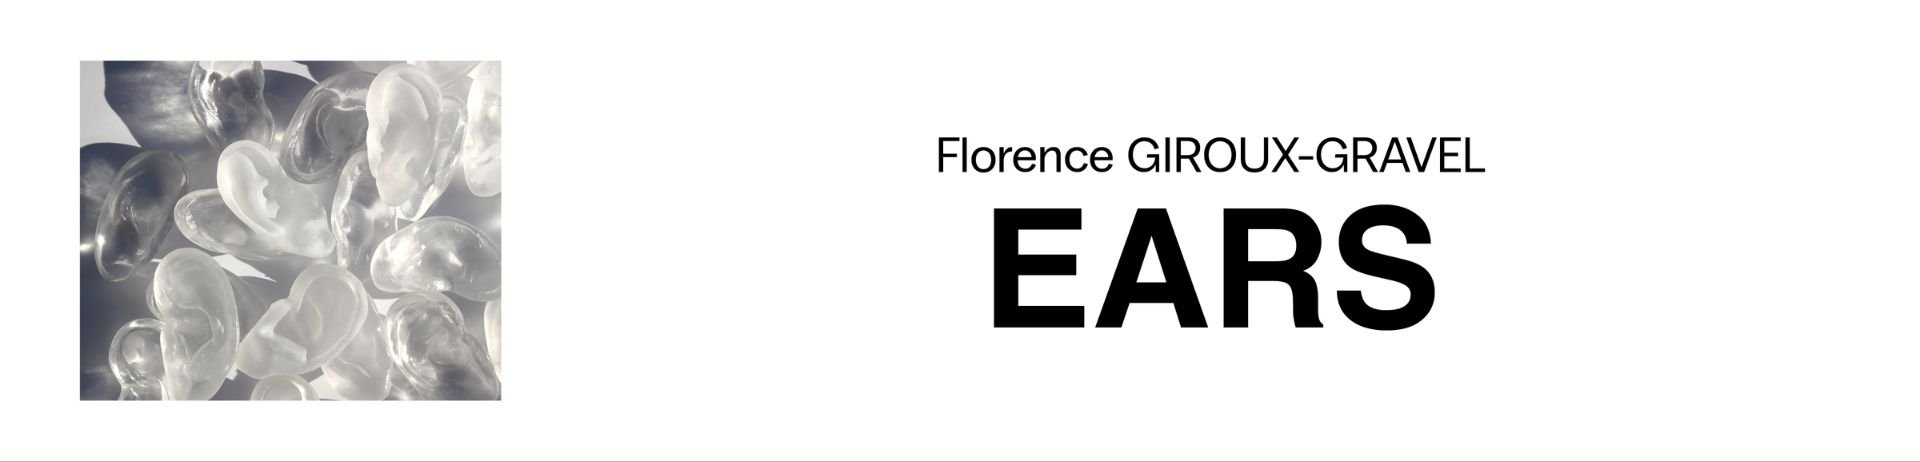 Florence Giroux Gravel Ears